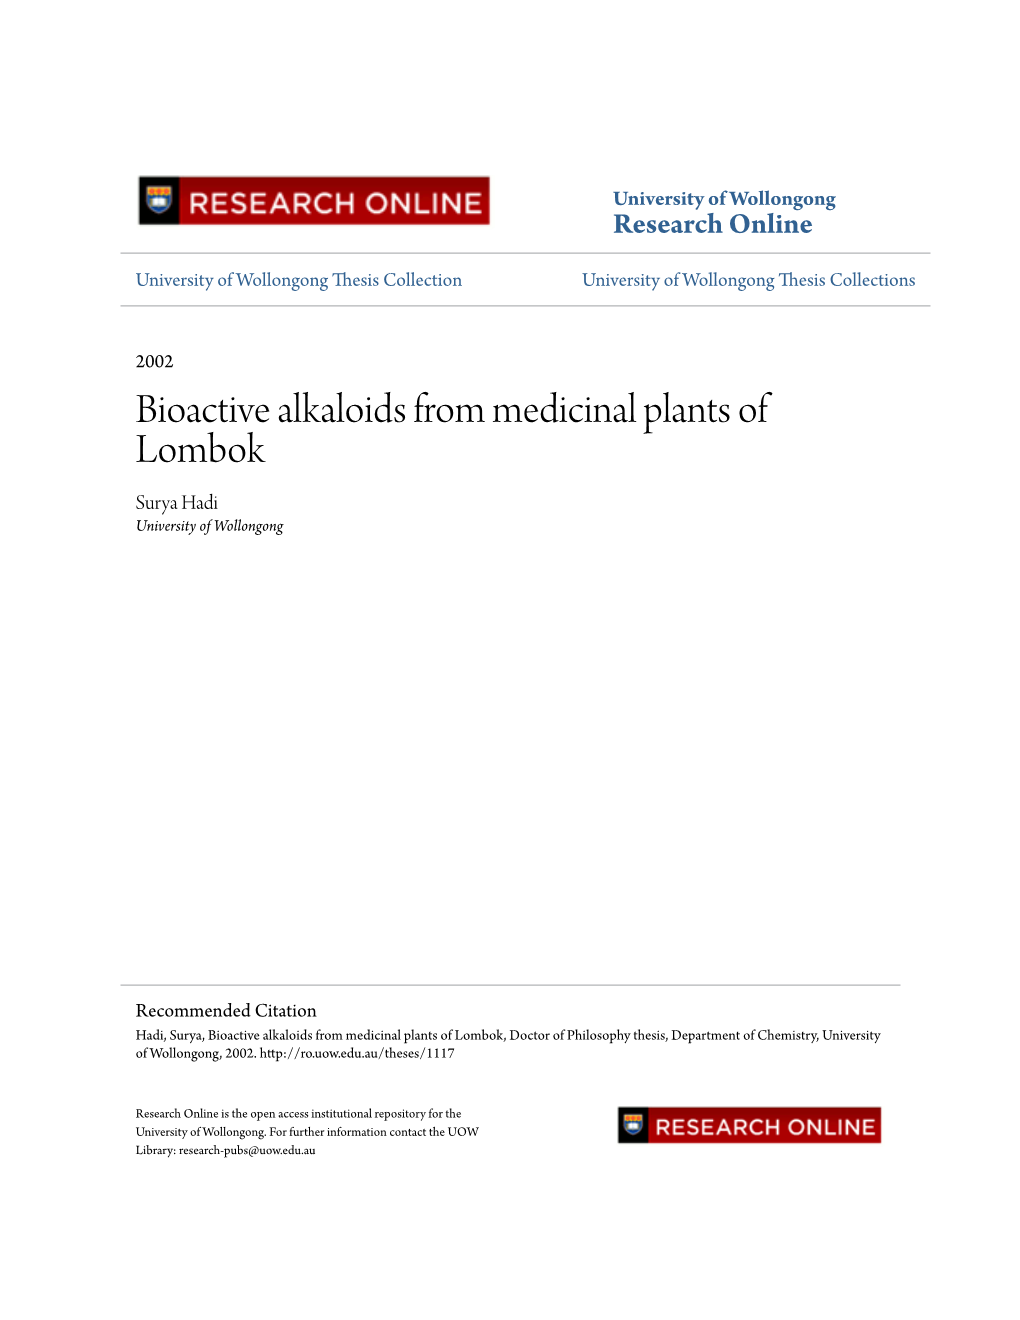 Bioactive Alkaloids from Medicinal Plants of Lombok Surya Hadi University of Wollongong